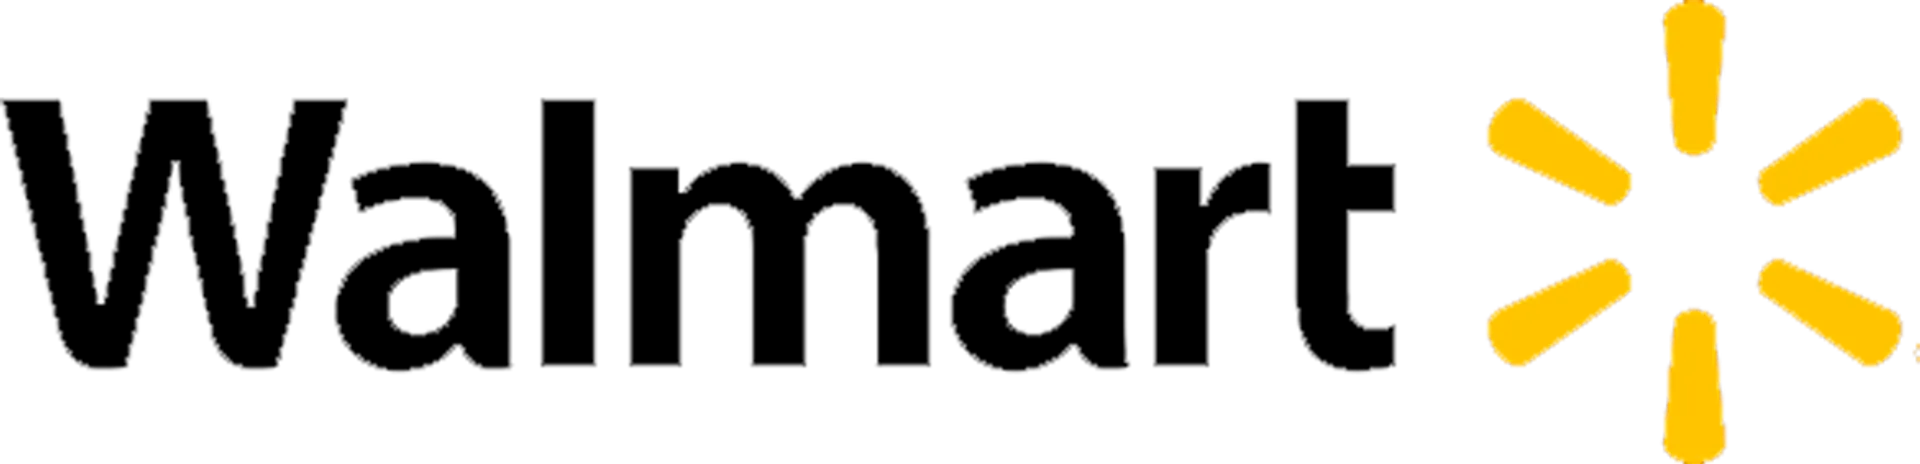 WALMART logo de circulaires